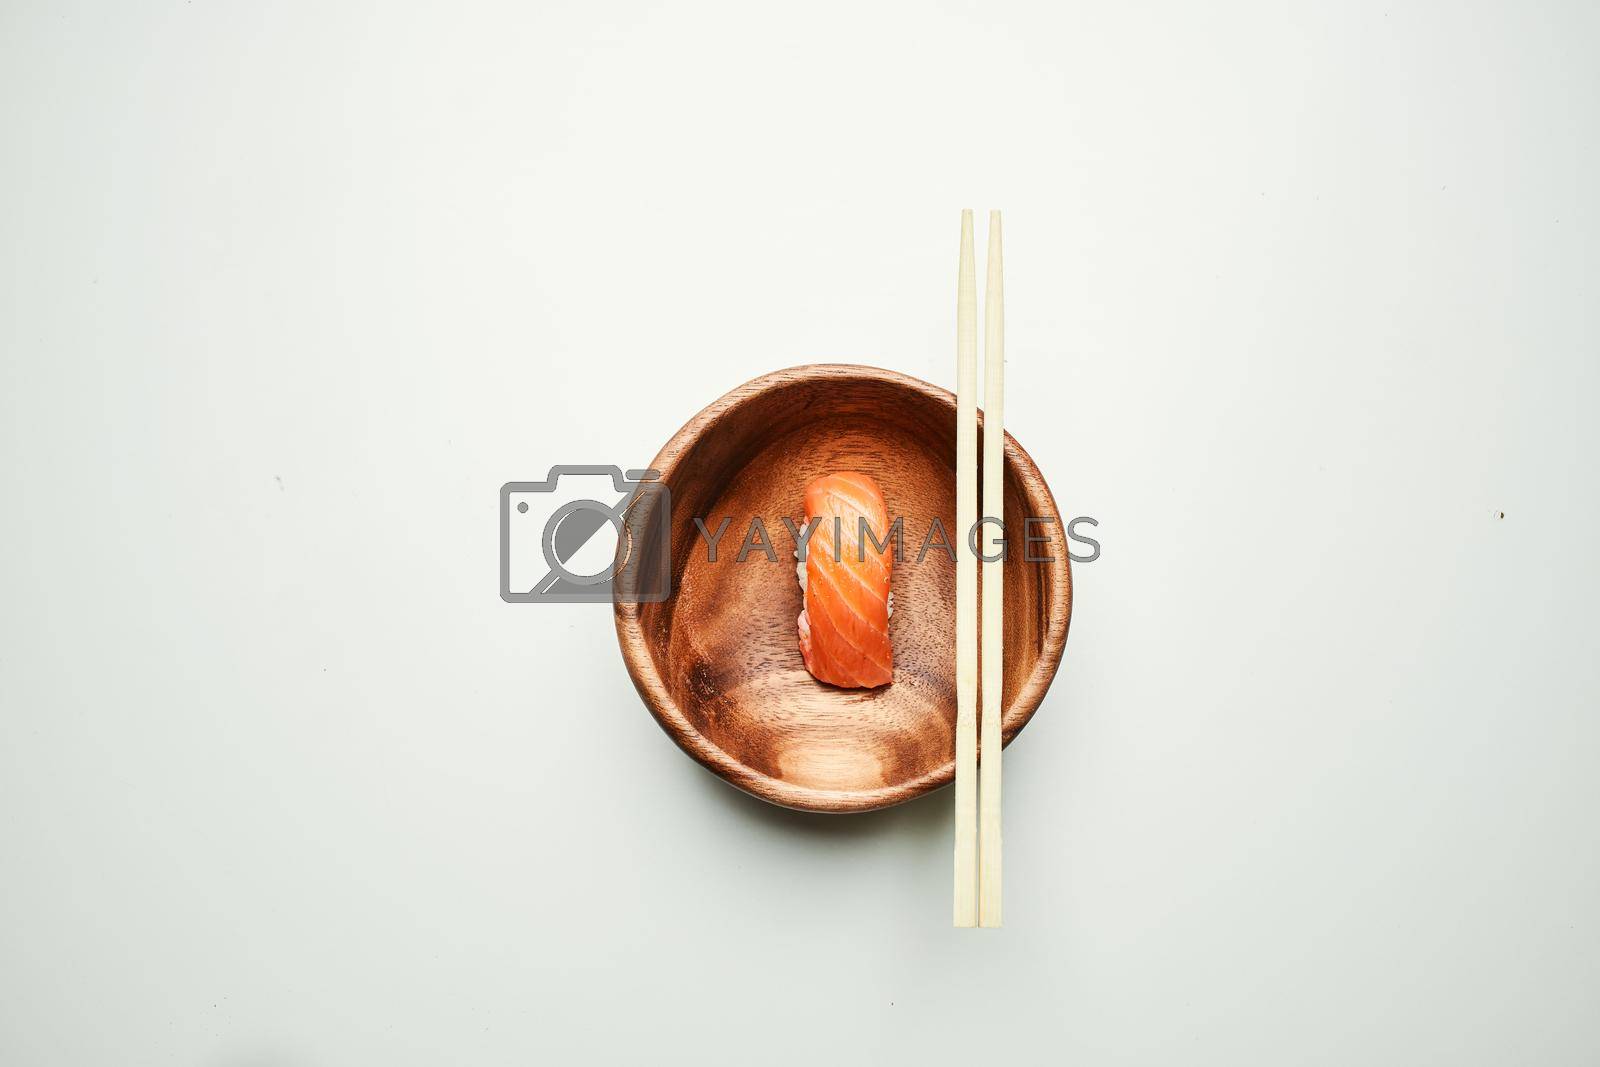 wooden plate sushi chopsticks japanese cuisine sea food. High quality photo